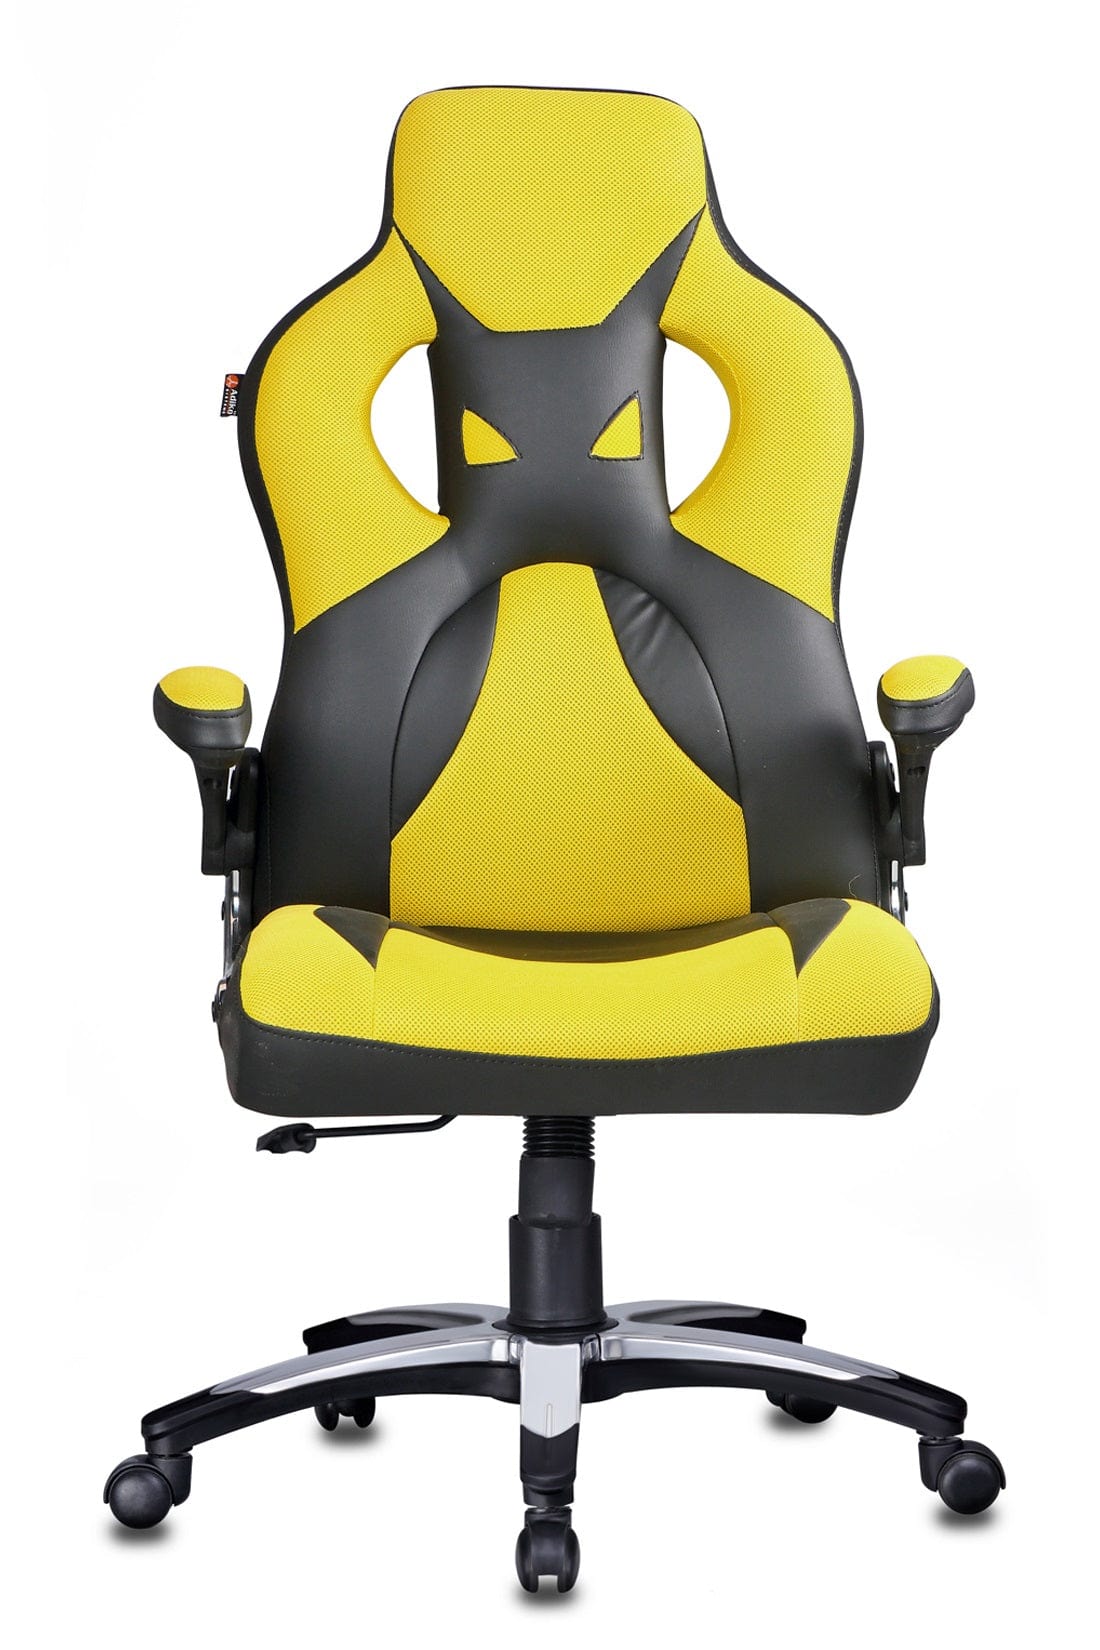 Stylish Designer Office chair in Black / Yellow